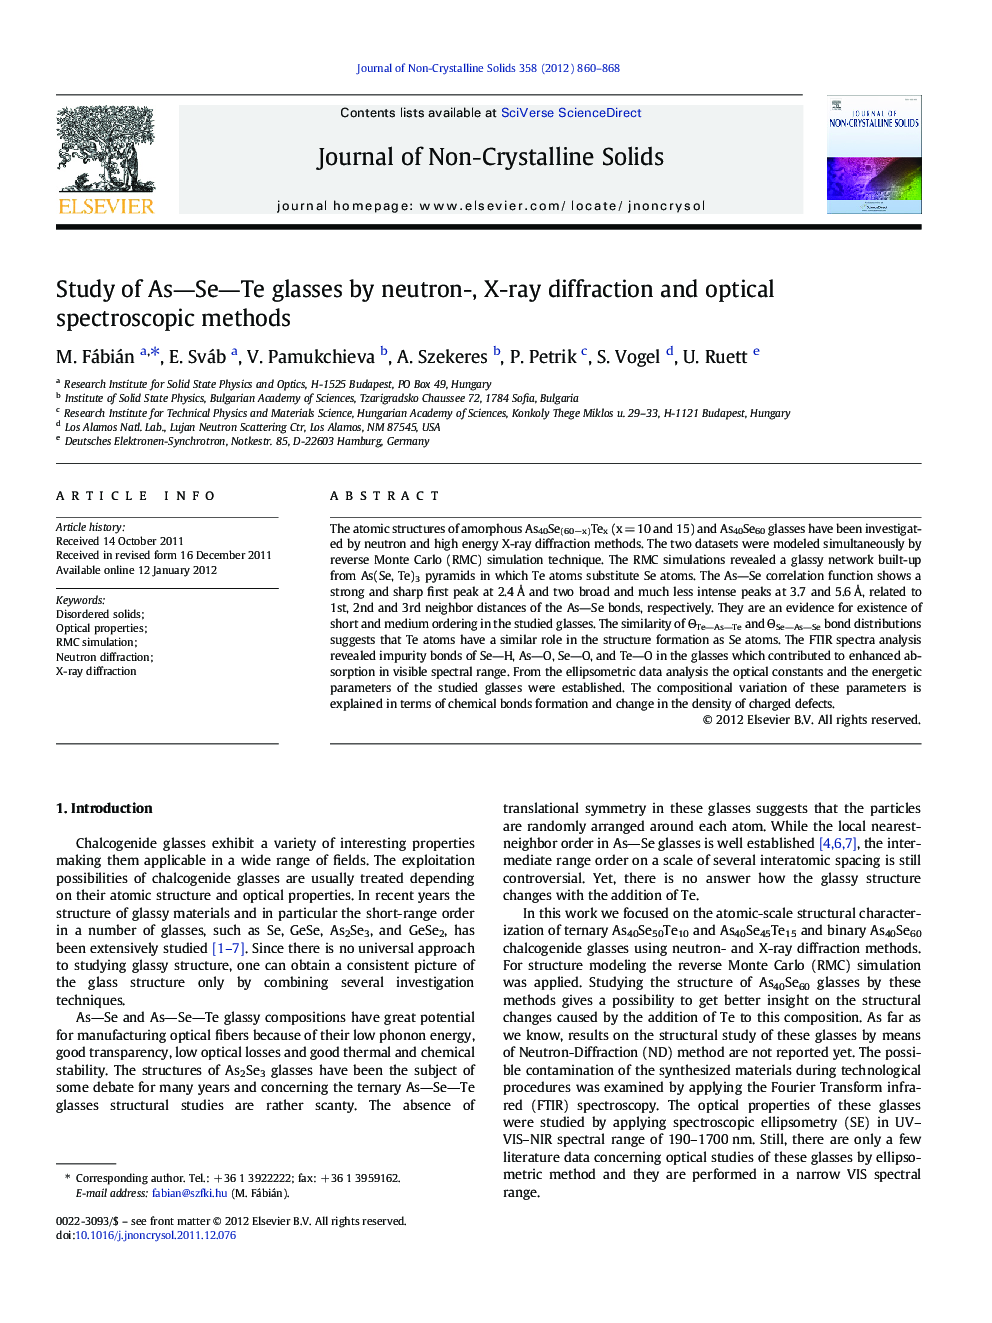 Study of AsâSeâTe glasses by neutron-, X-ray diffraction and optical spectroscopic methods